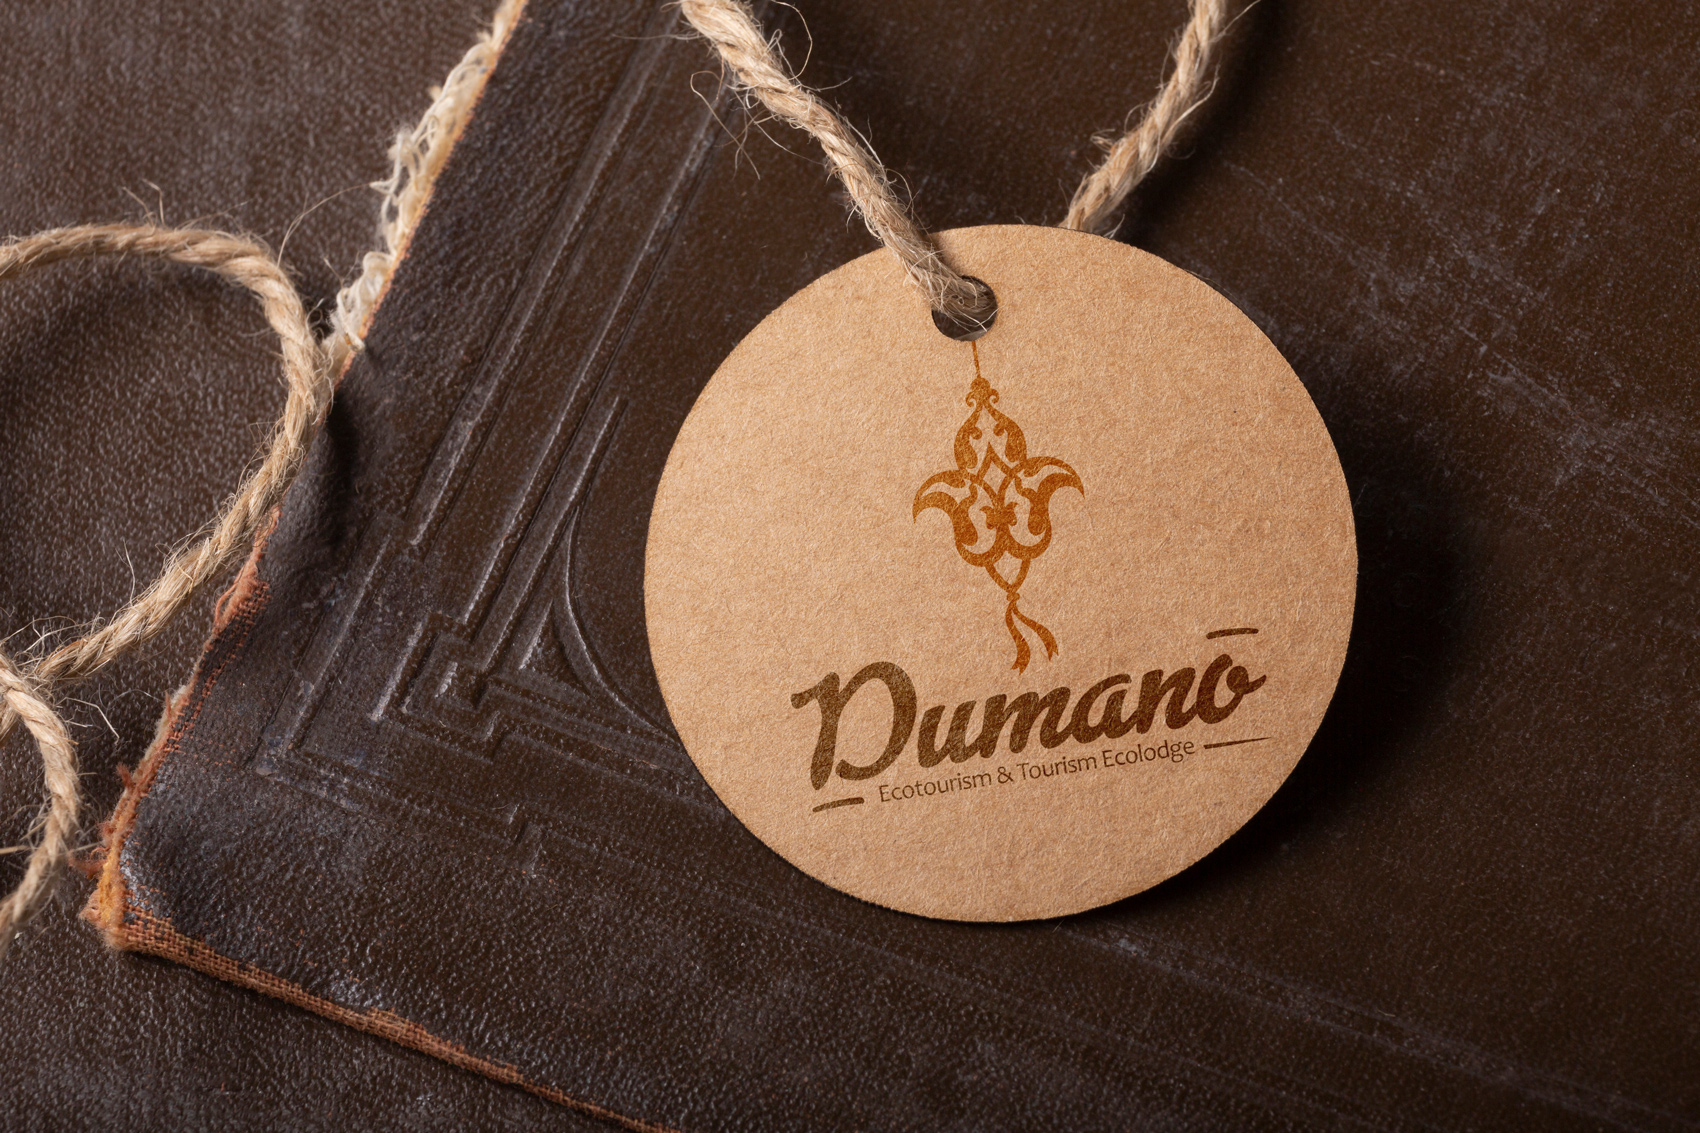 Dumano Ecotourism Lodge Identity and Logo Design by ZarifGraphic